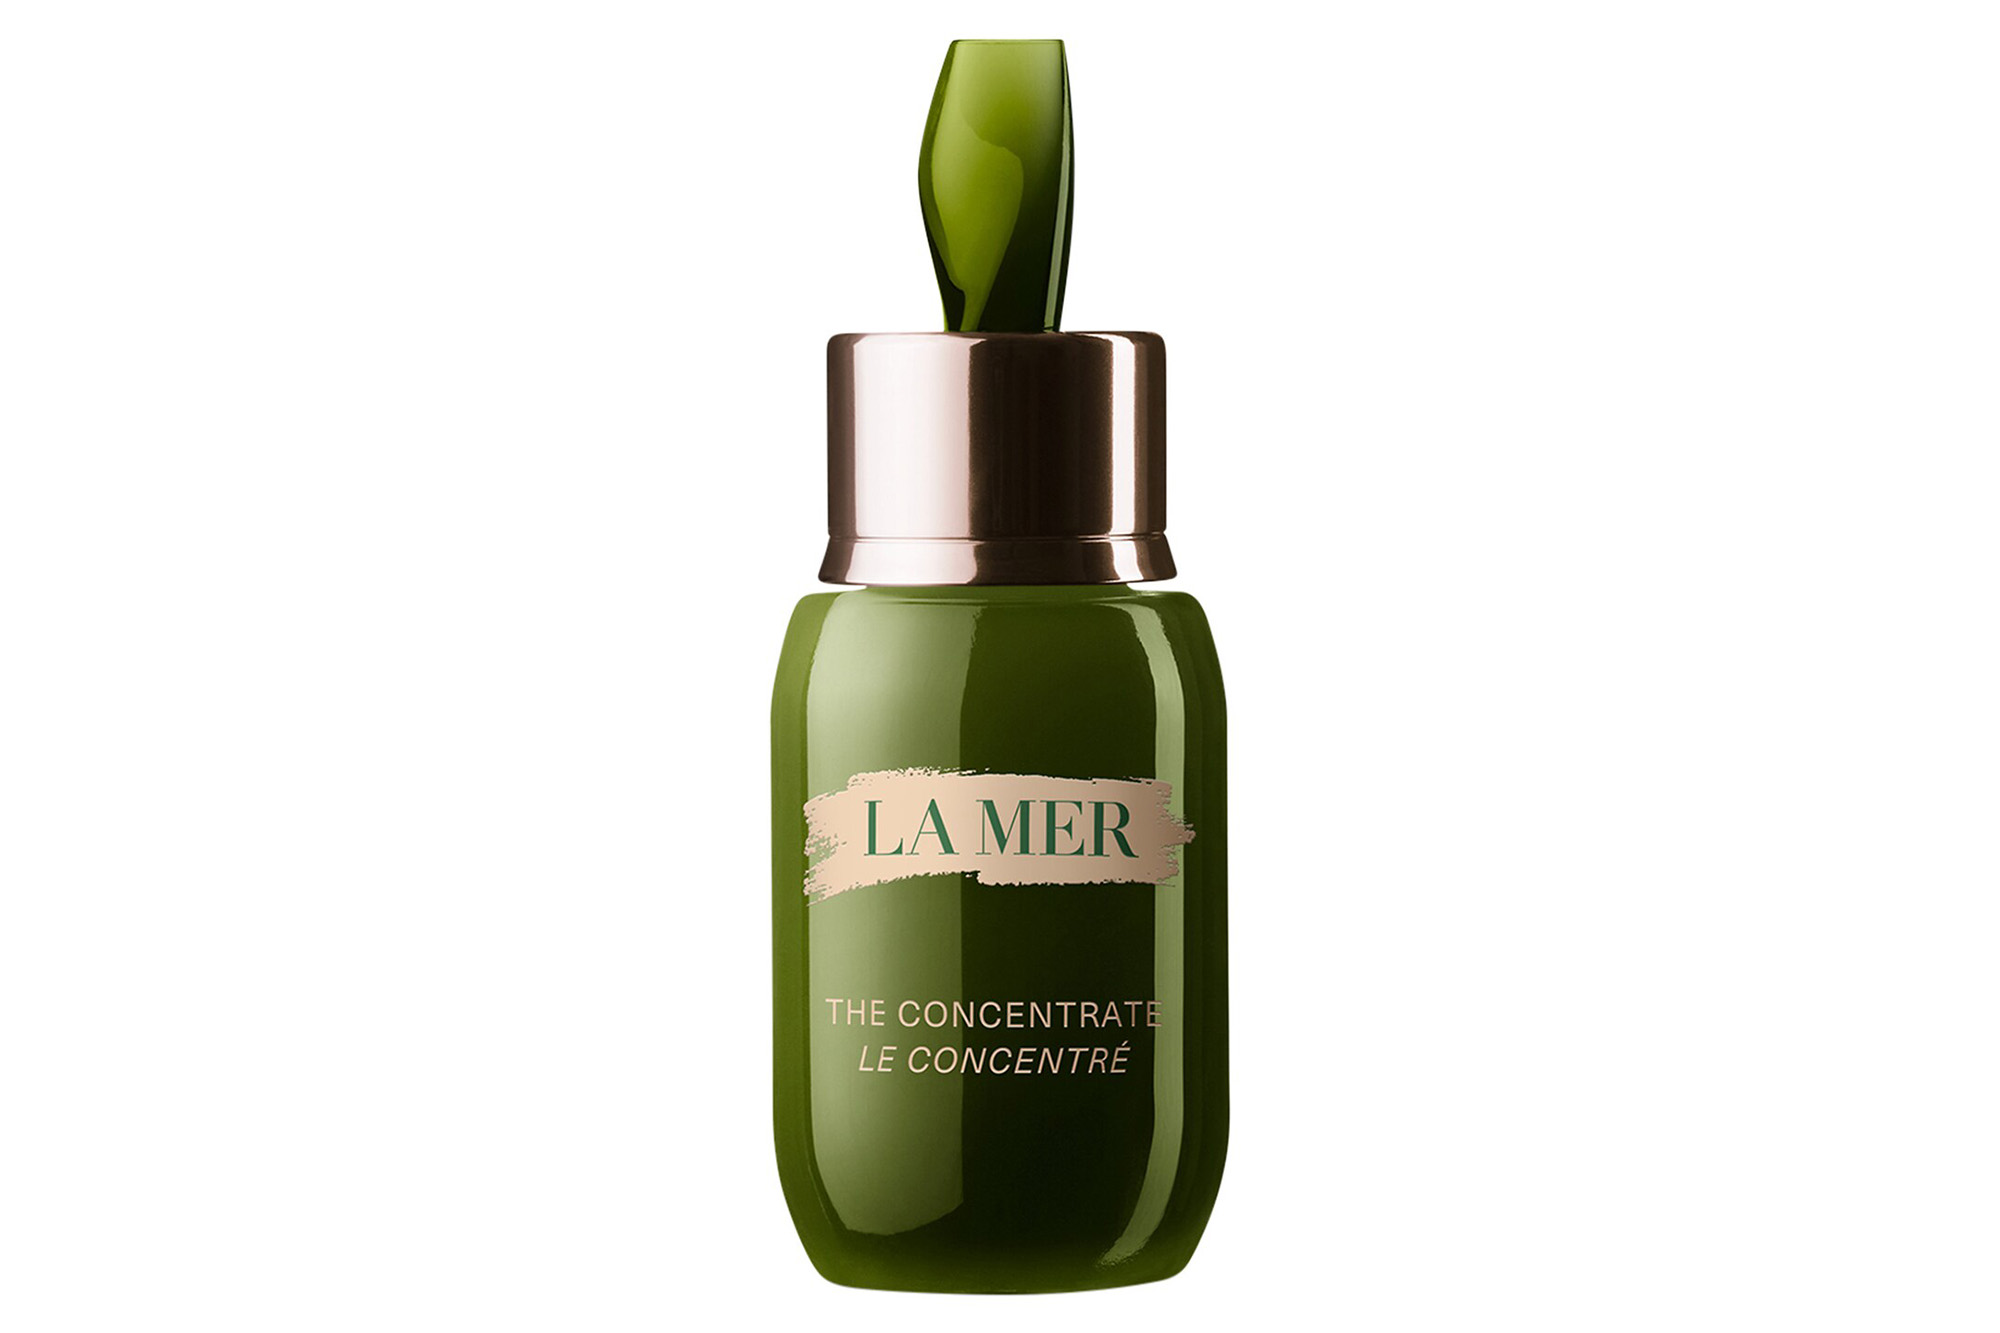 A green jar of La Mer serum